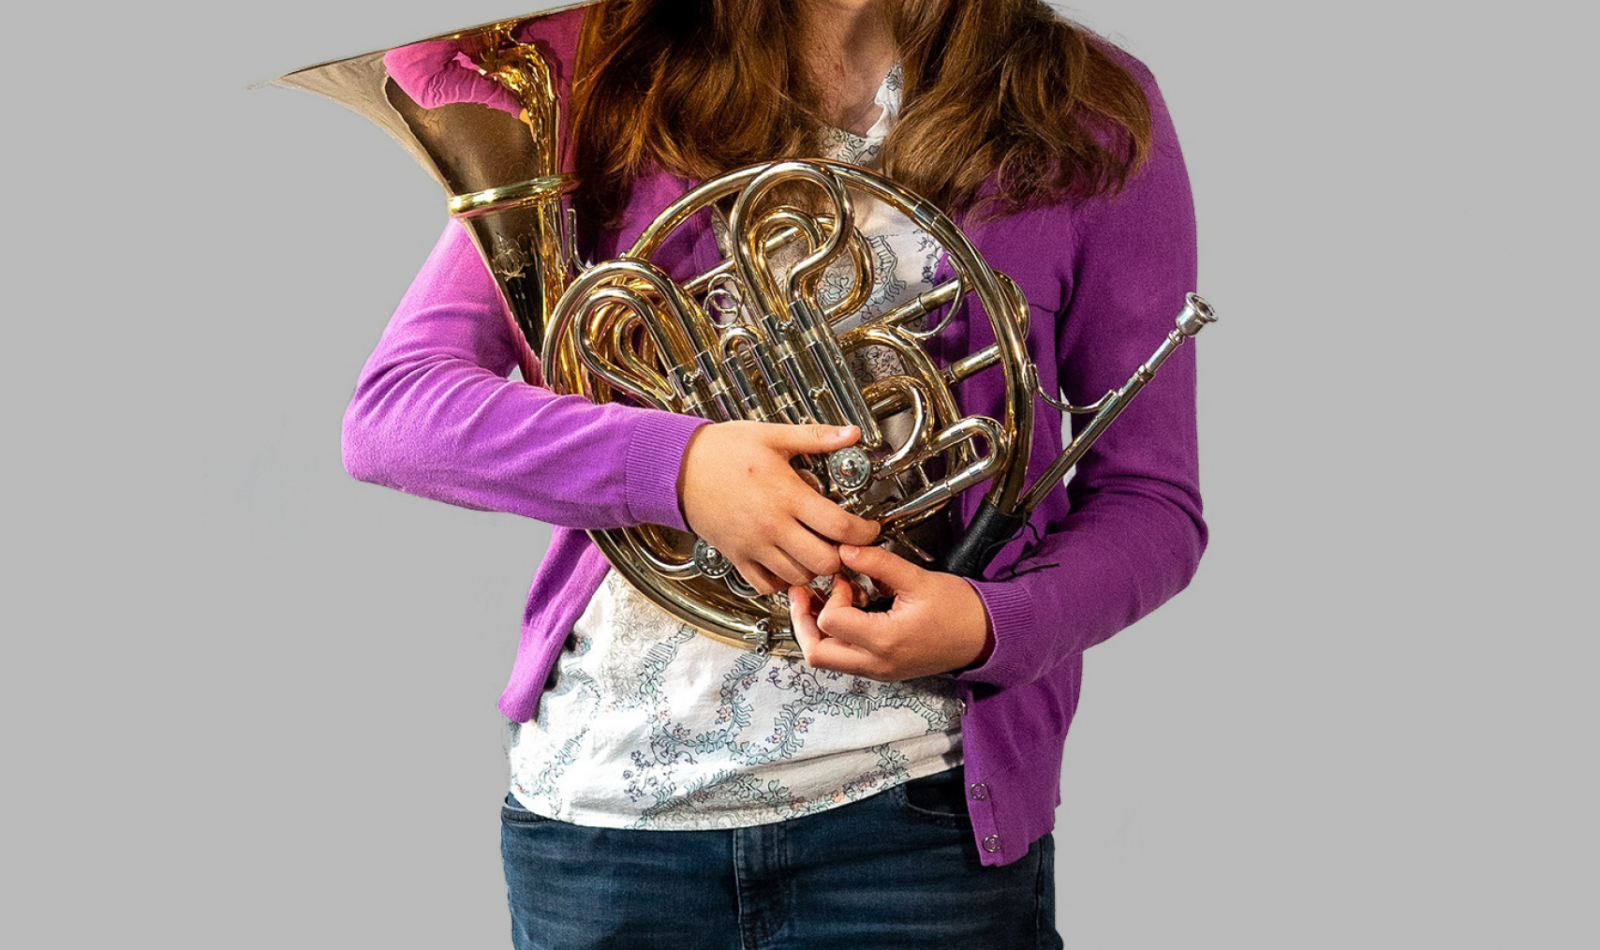 NOYO French horn player Georgina